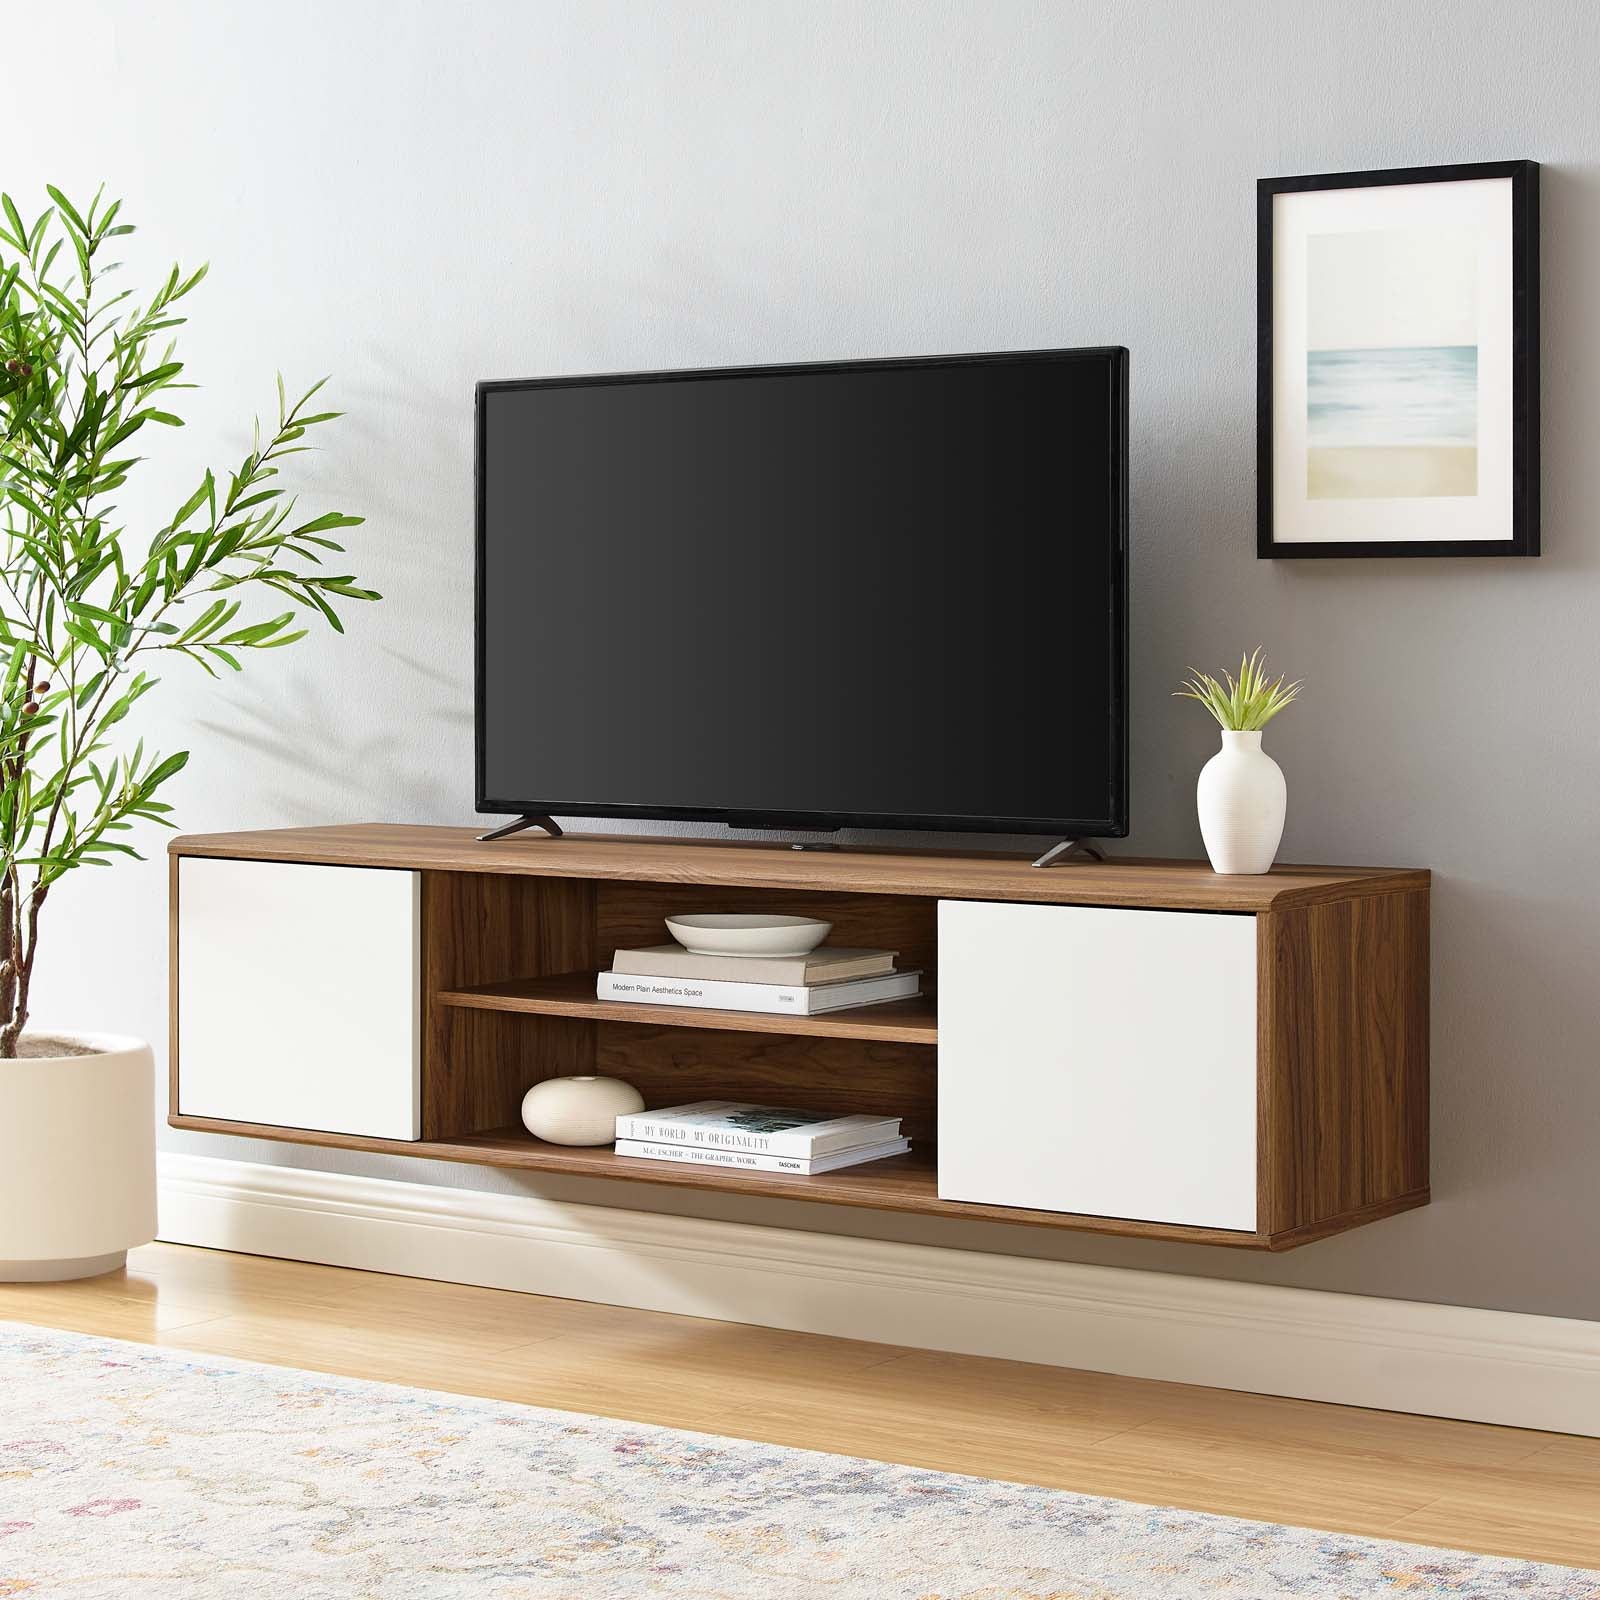 wall mounted tv shelf